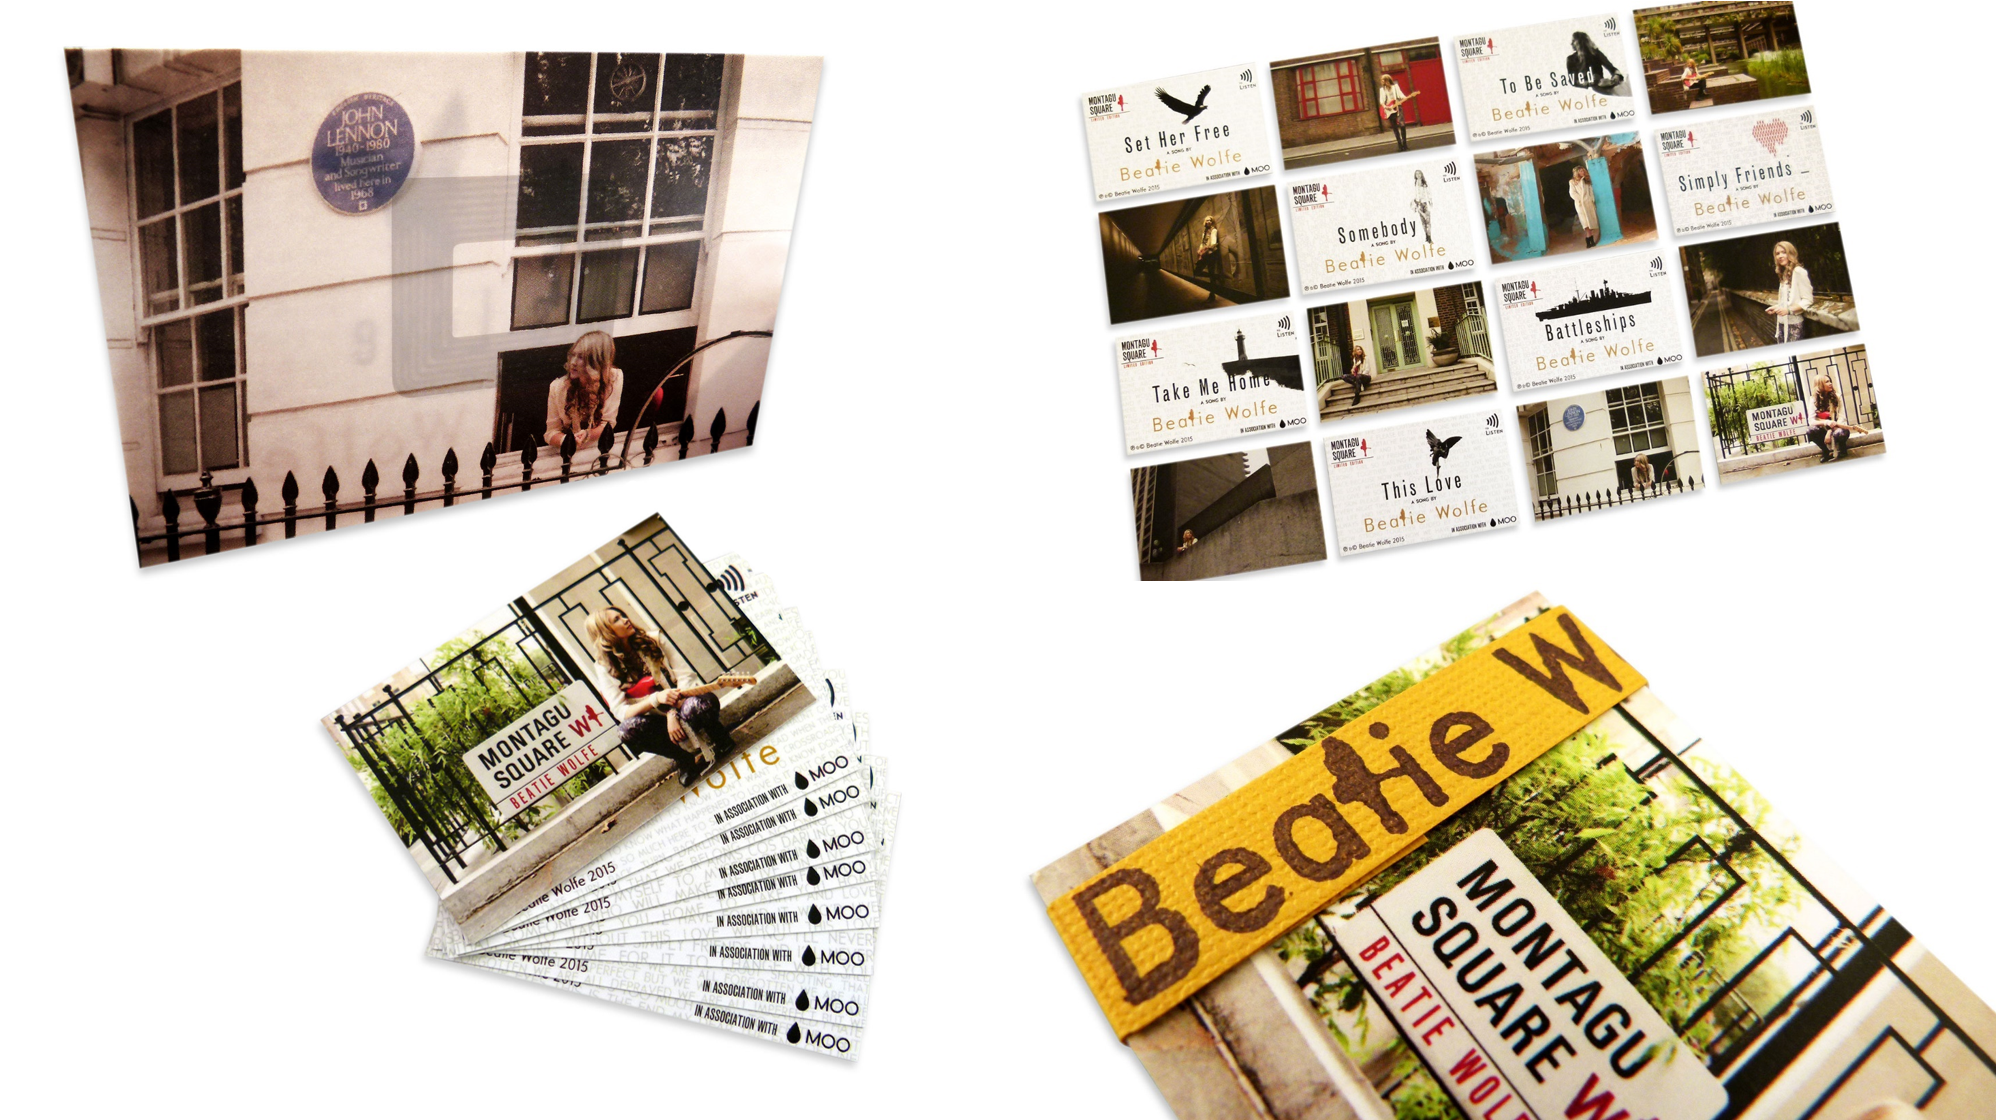 Beatie Wolfe - 2015 Montagu Square - Music Album Deck of Cards - World's First (1)